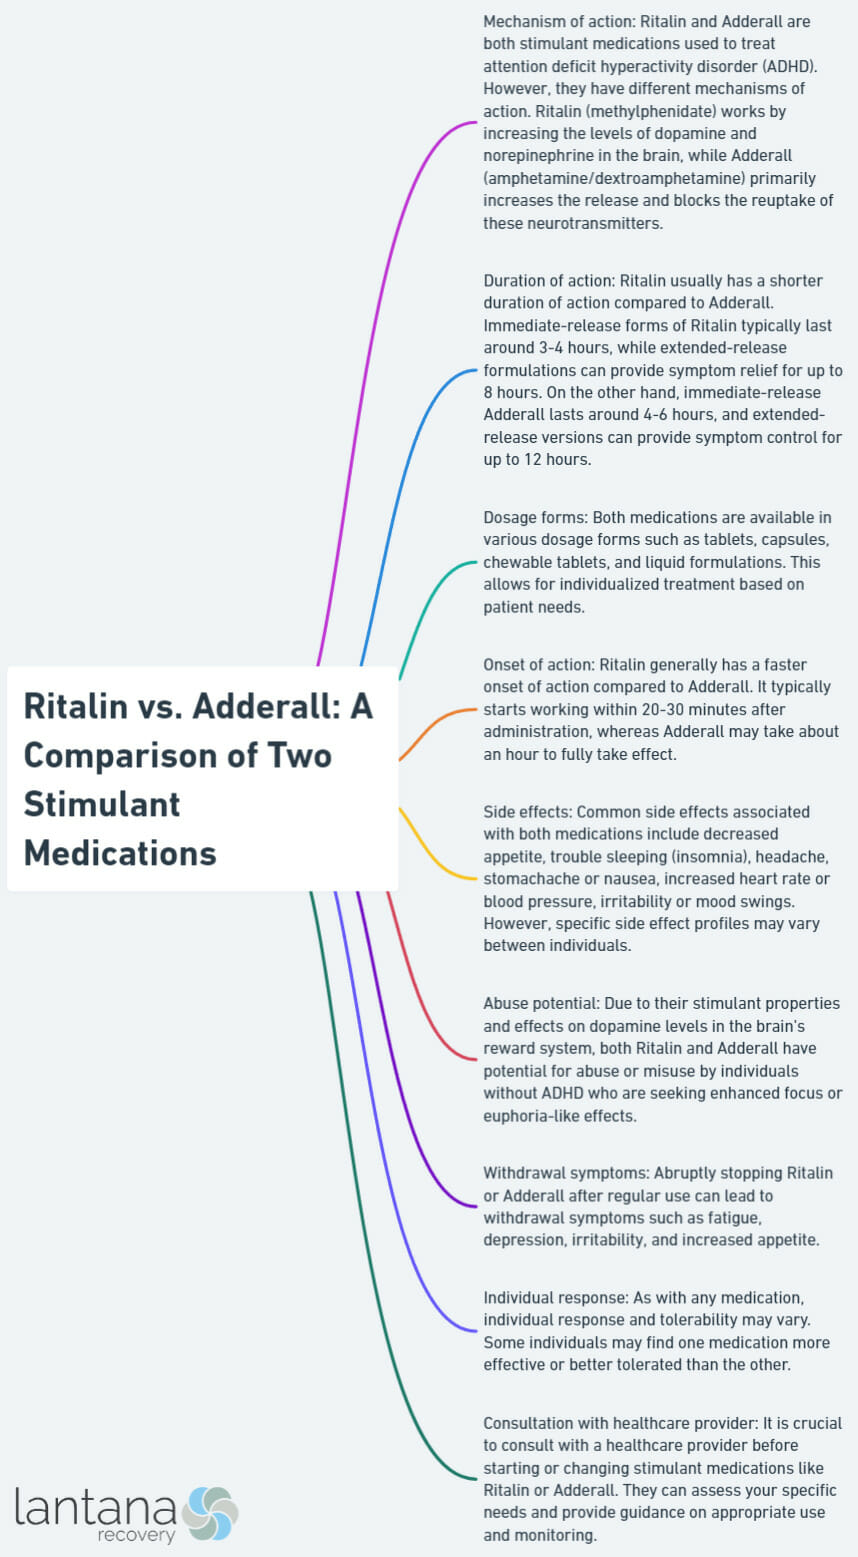 Ritalin vs. Adderall: A Comparison of Two Stimulant Medications